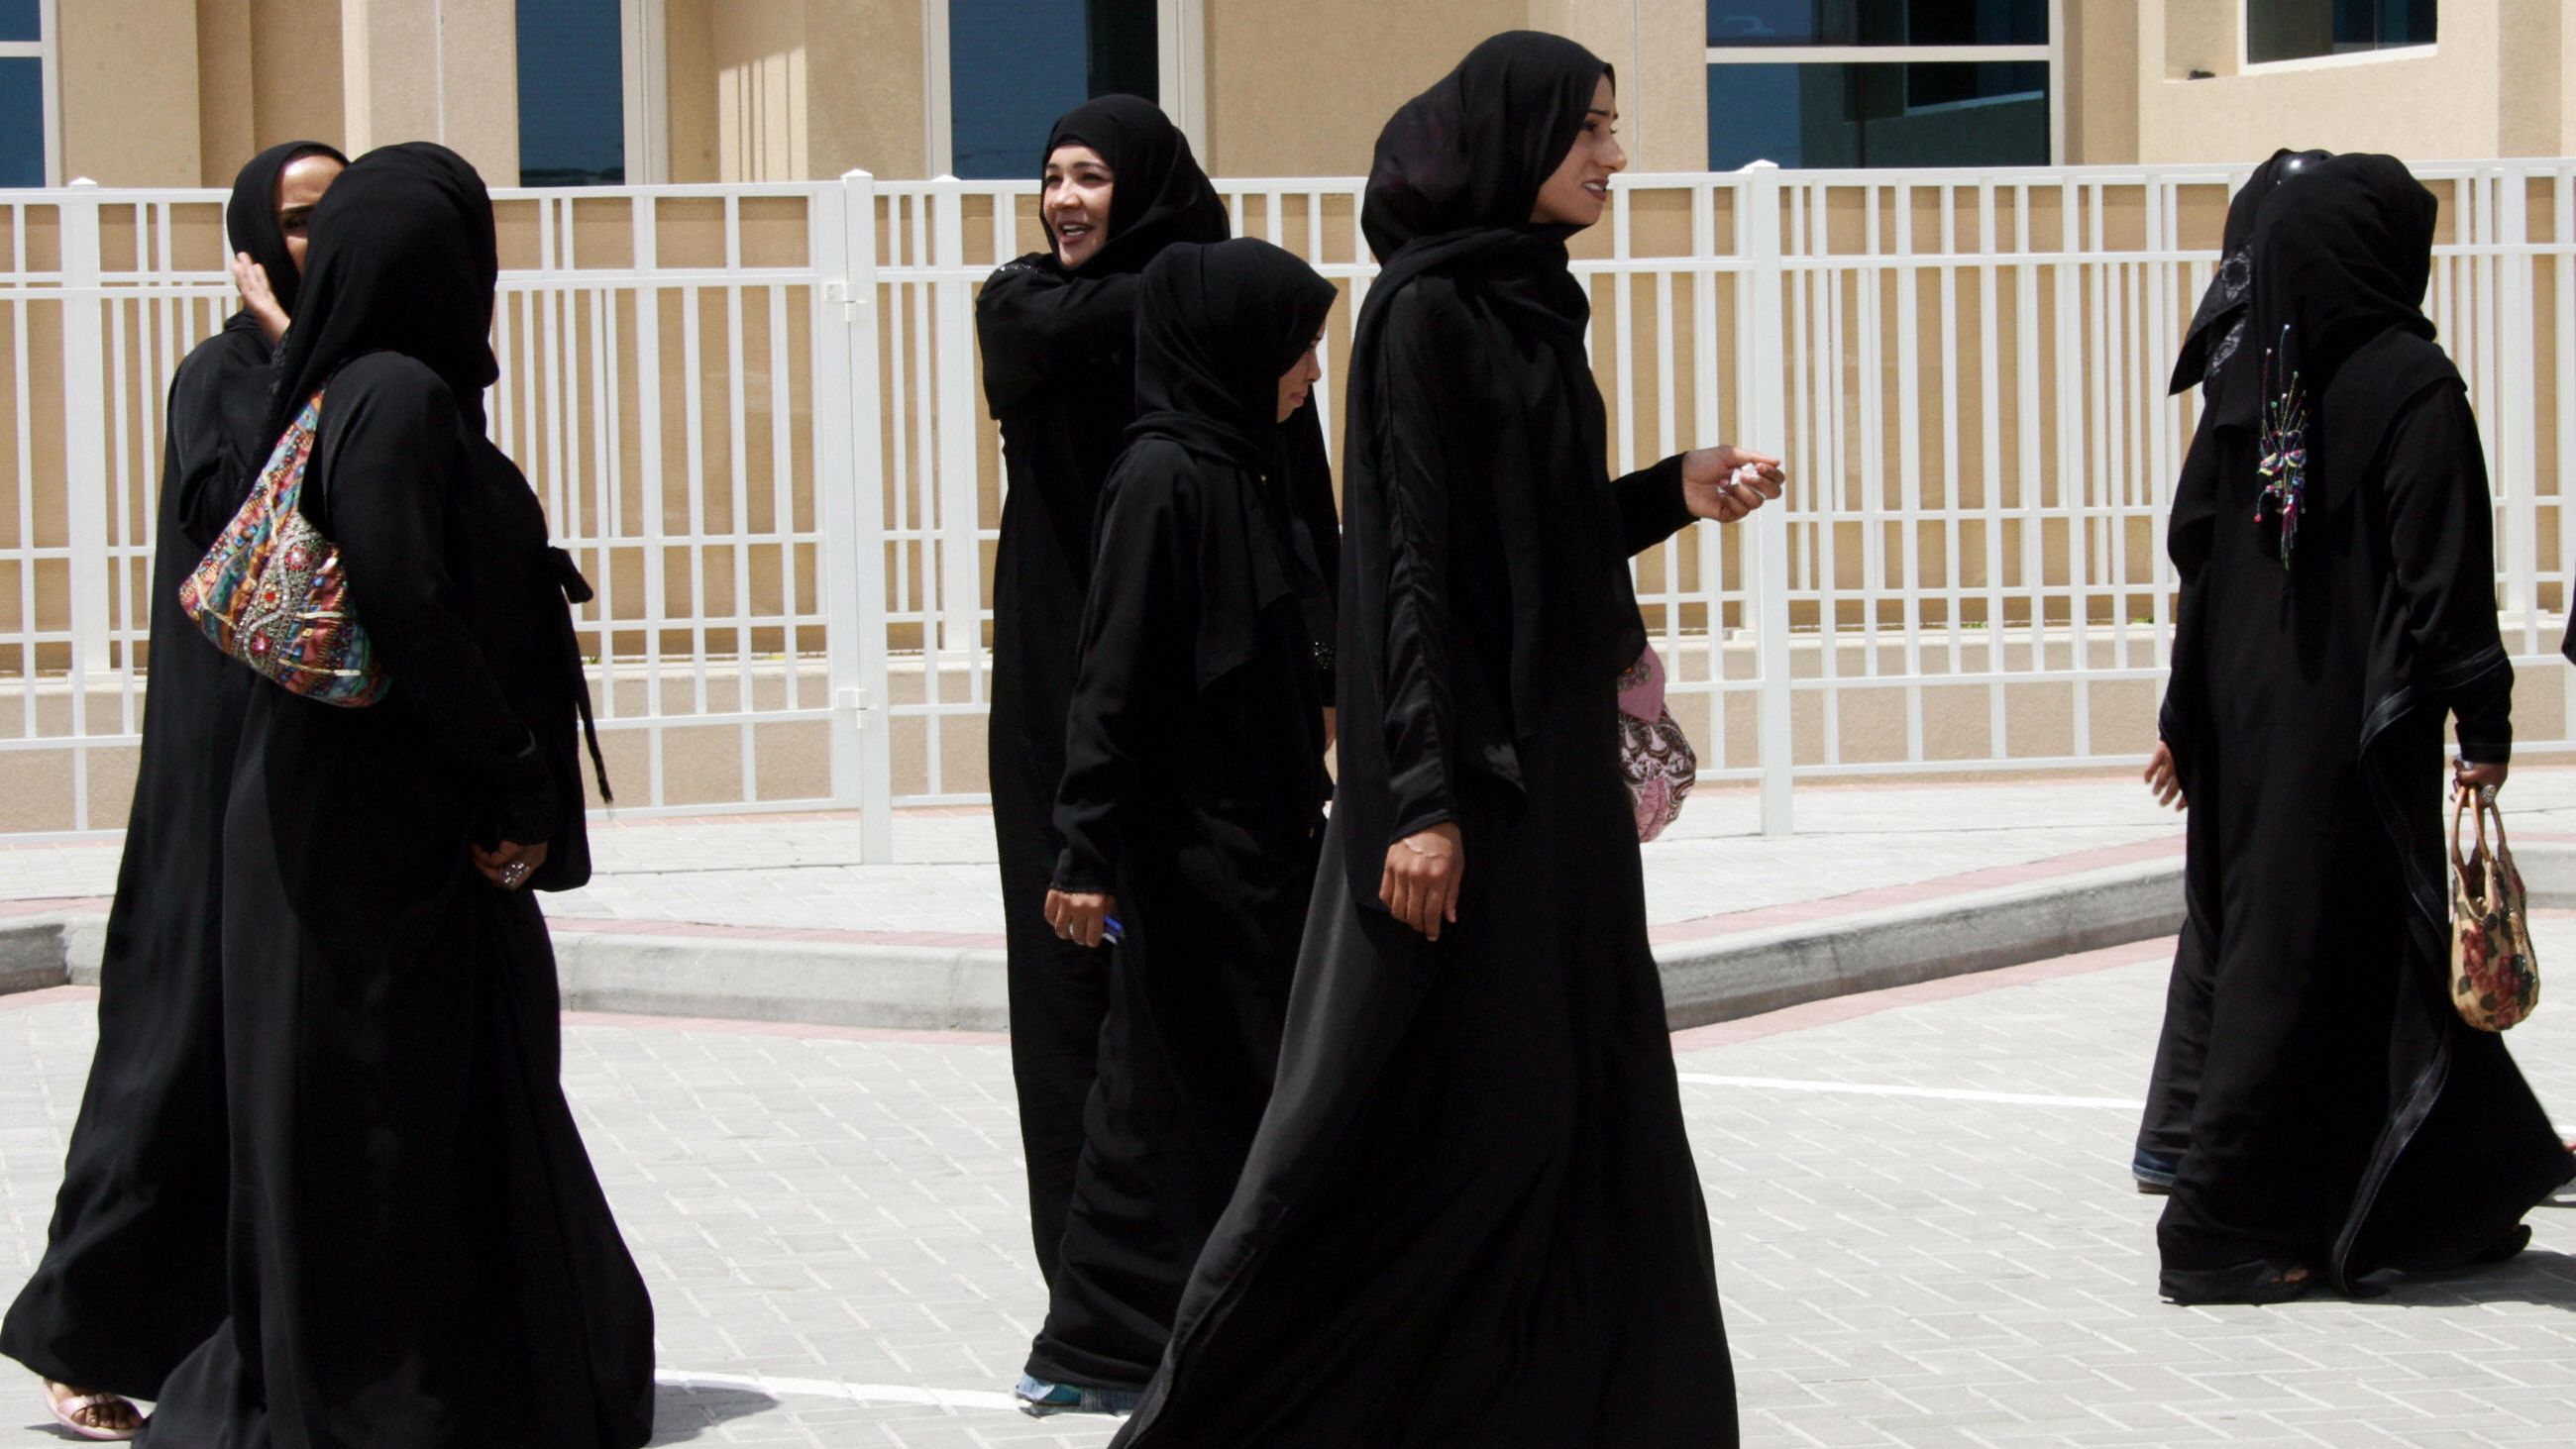 https://media.cnn.com/api/v1/images/stellar/prod/141008161417-03-muslim-women-dress.jpg?q=w_2600,h_1463,x_0,y_0,c_fill